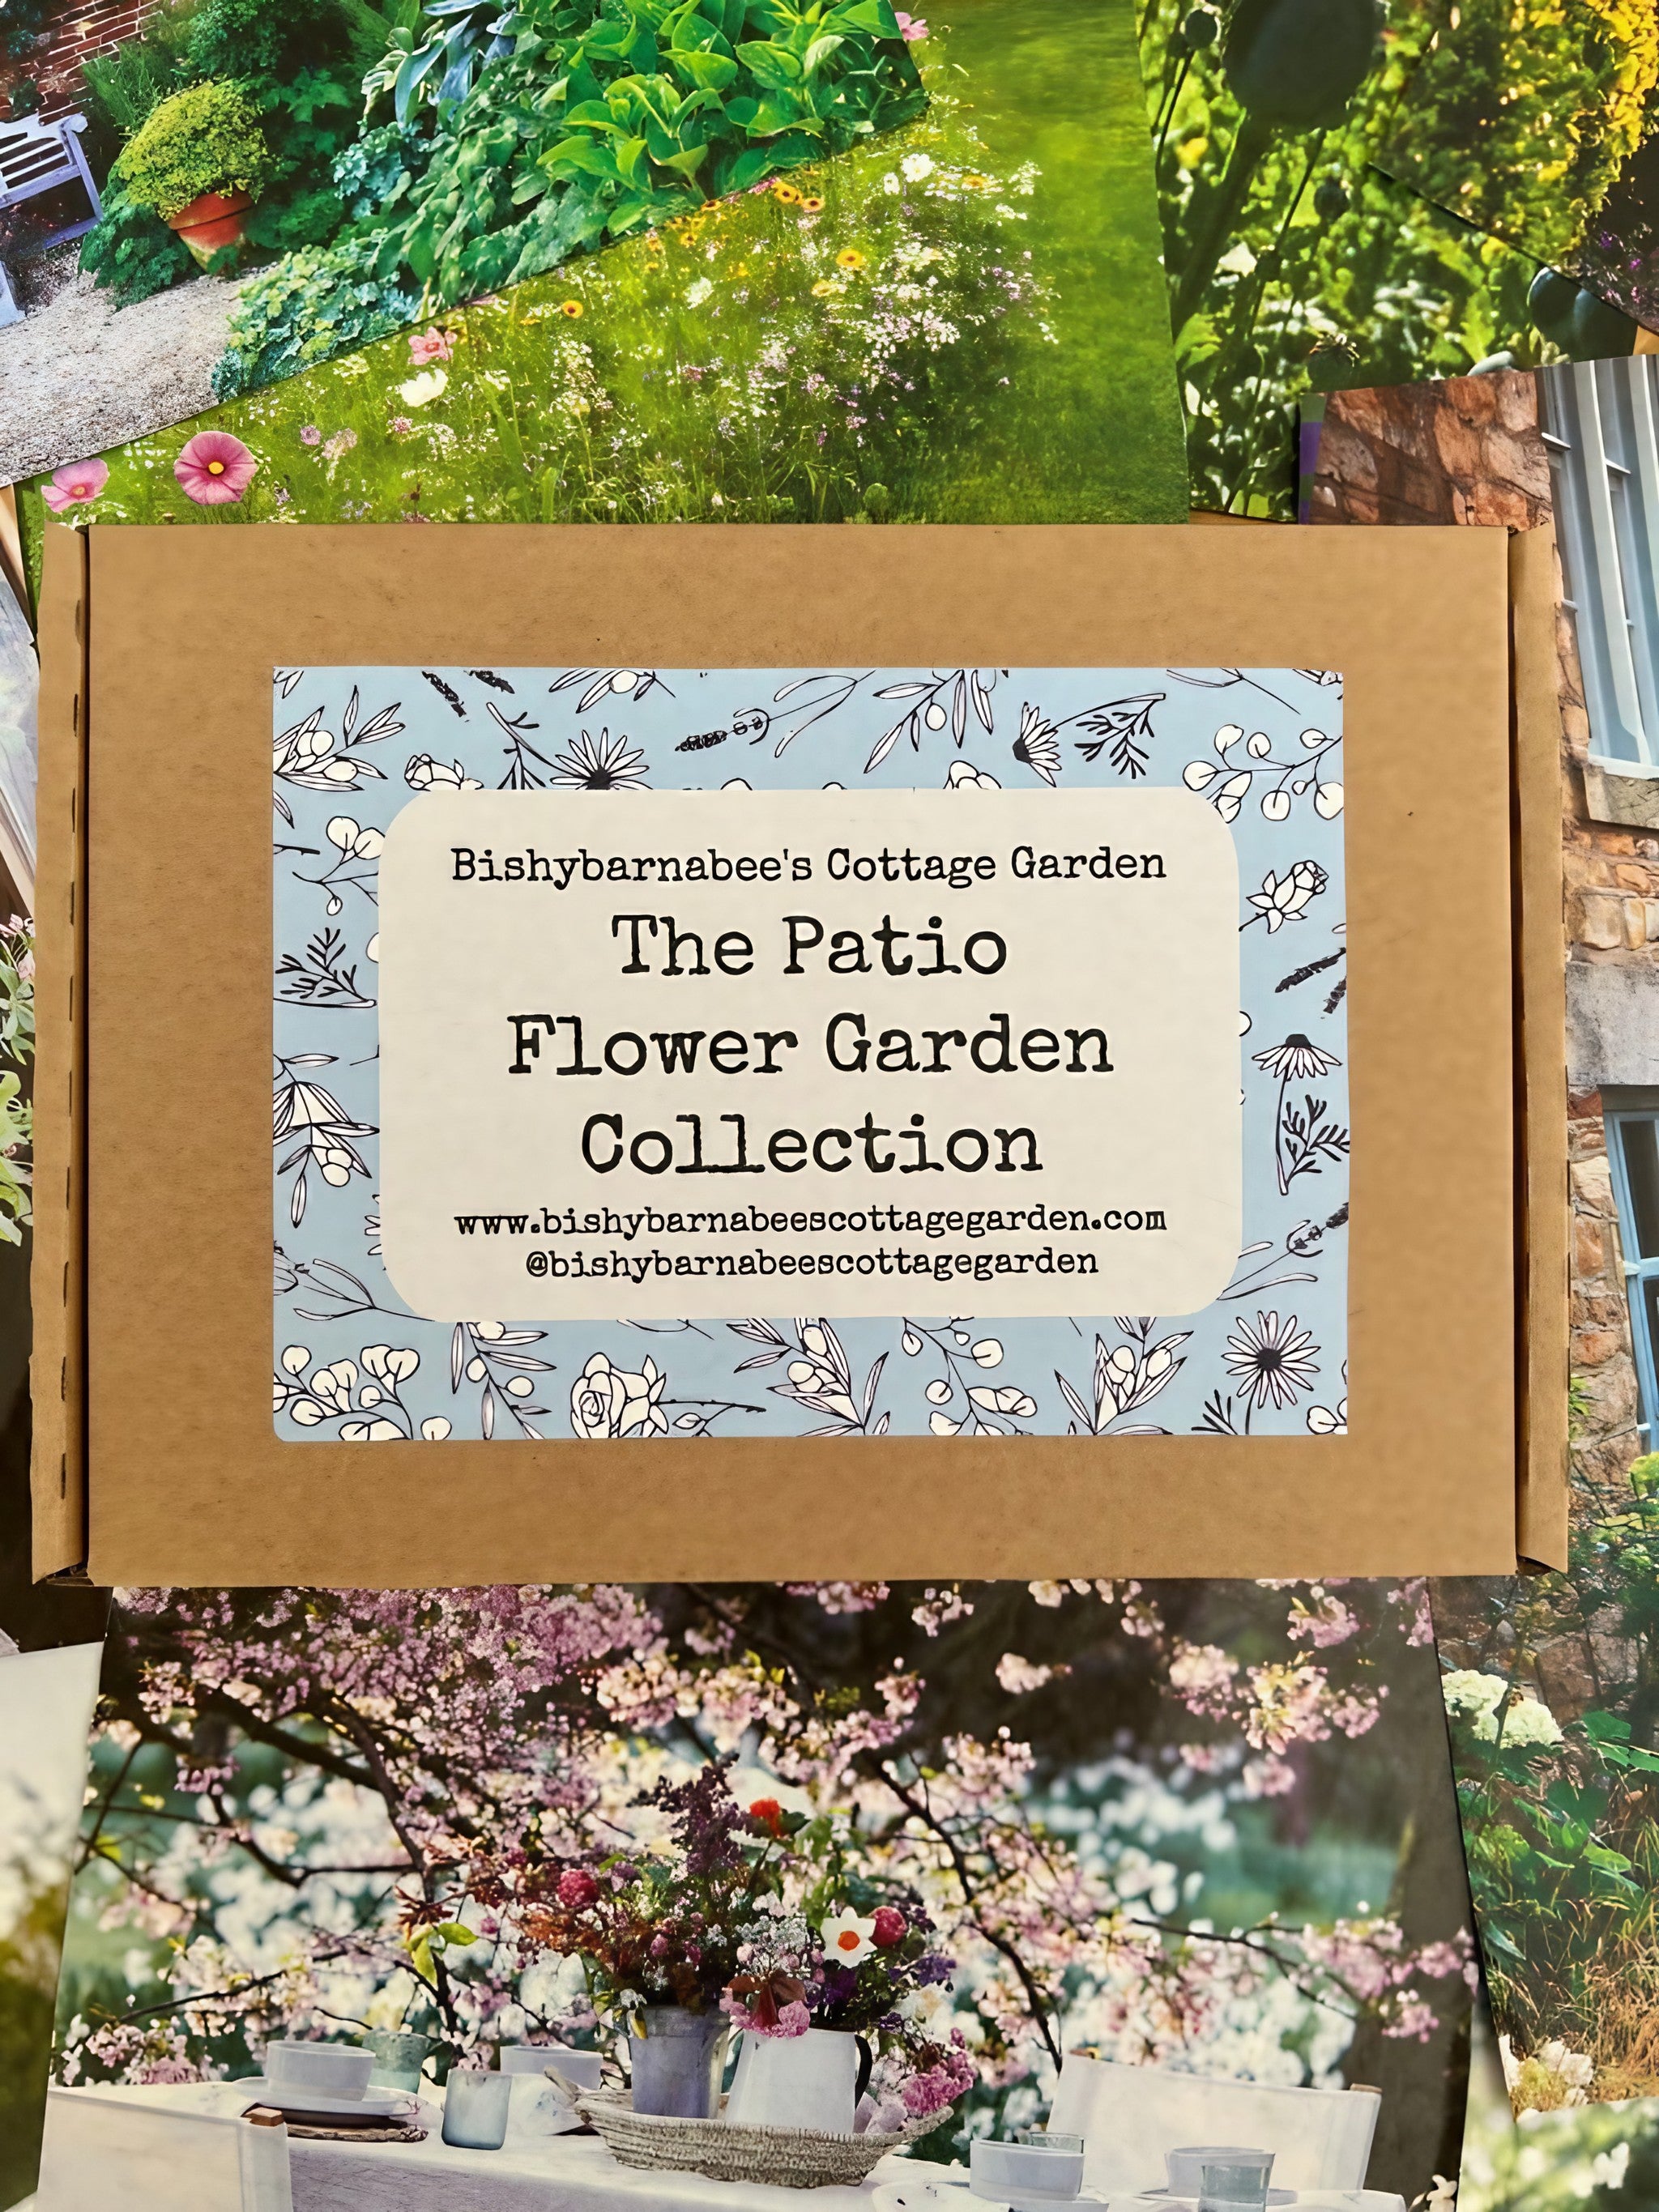 The Patio Flower Garden Collection